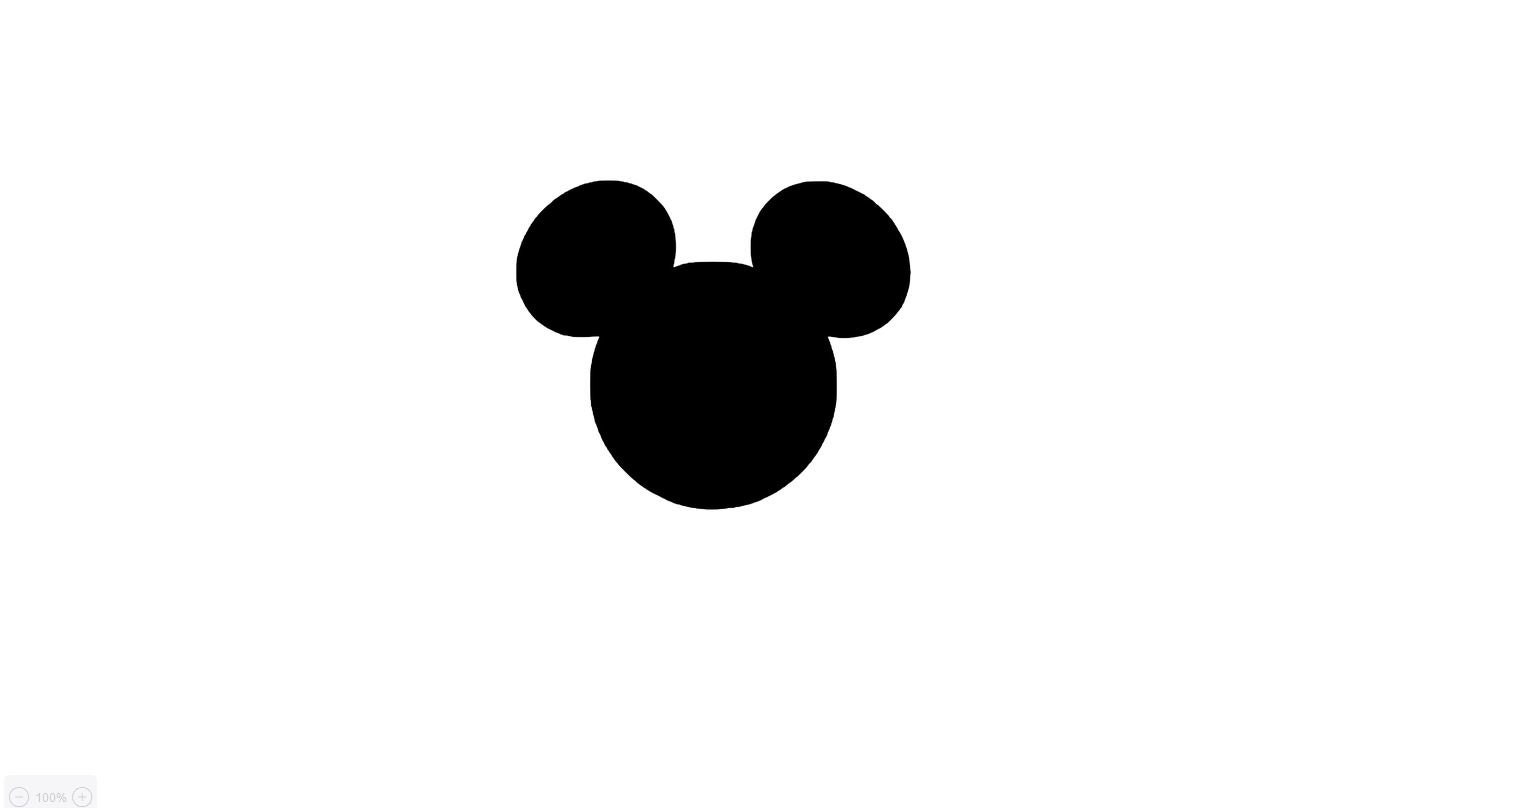 Disney Mickey Mouse Iron on Applique Mickey Blue Silhouette